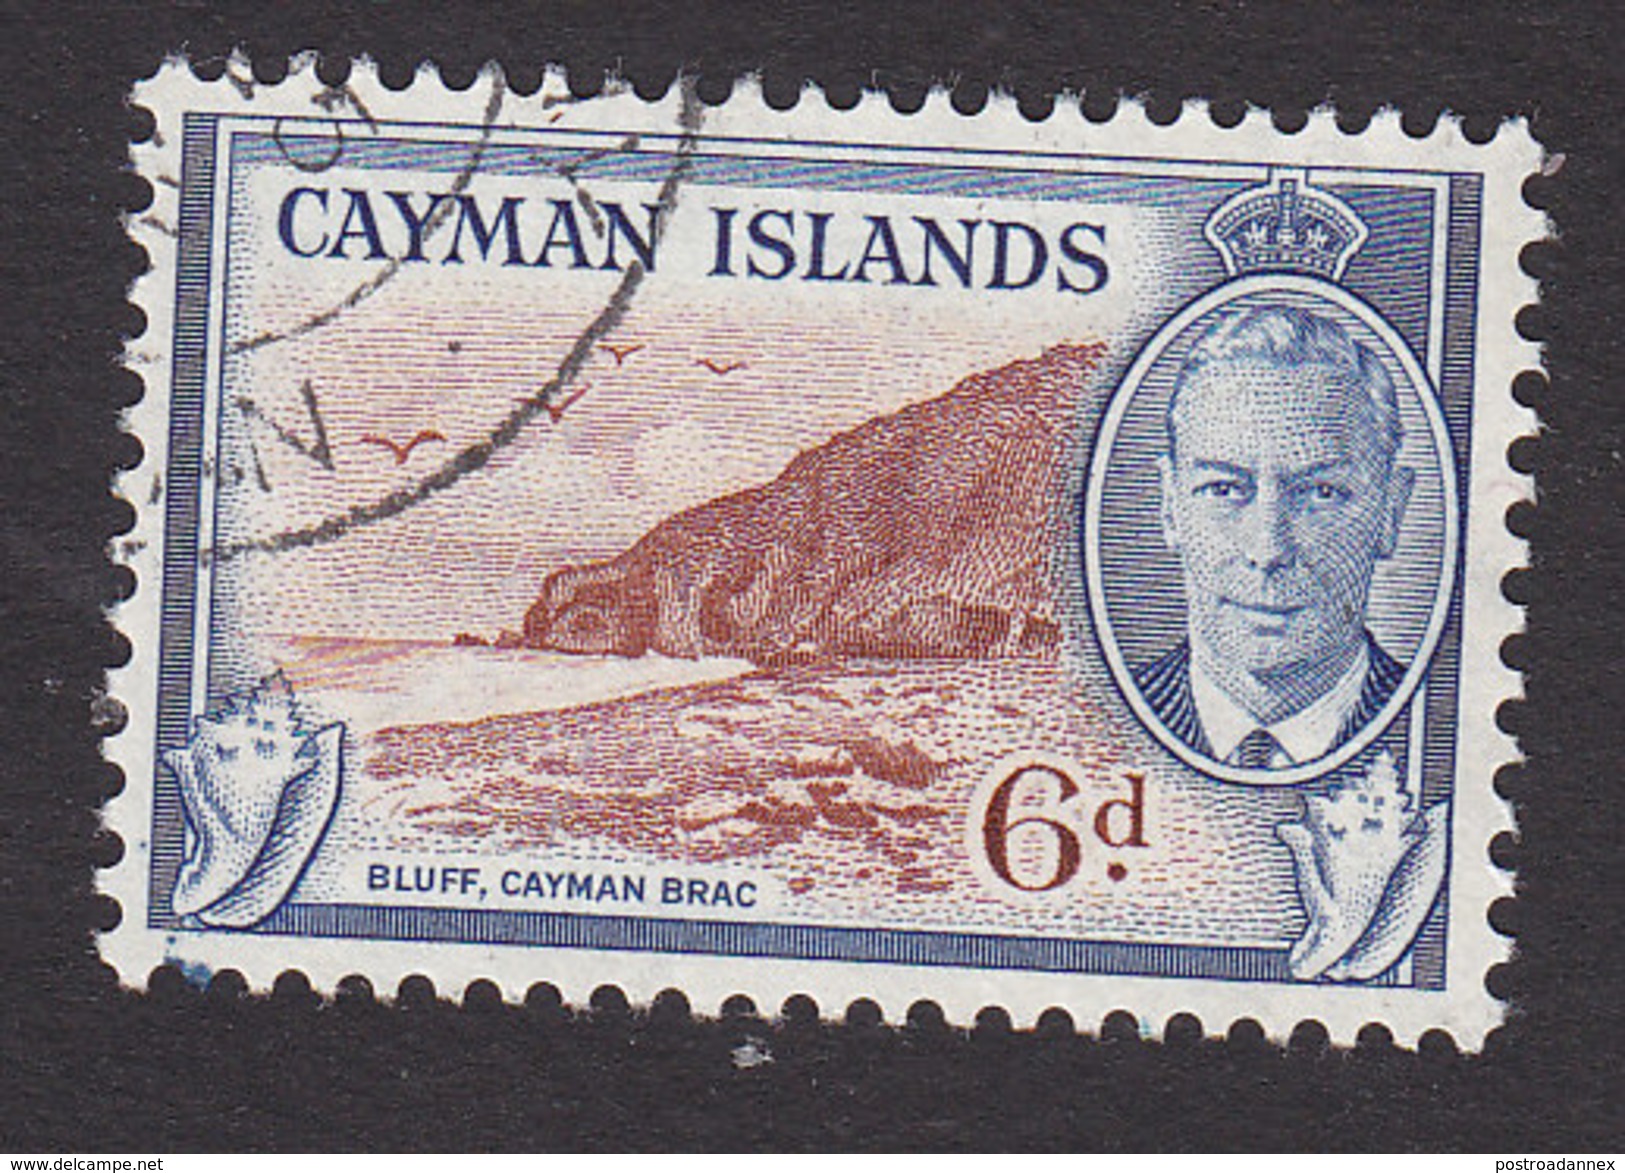 Cayman Islands, Scott #129, Used, George VI And Scene Of Cayman Islands, Issued 1950 - Cayman Islands